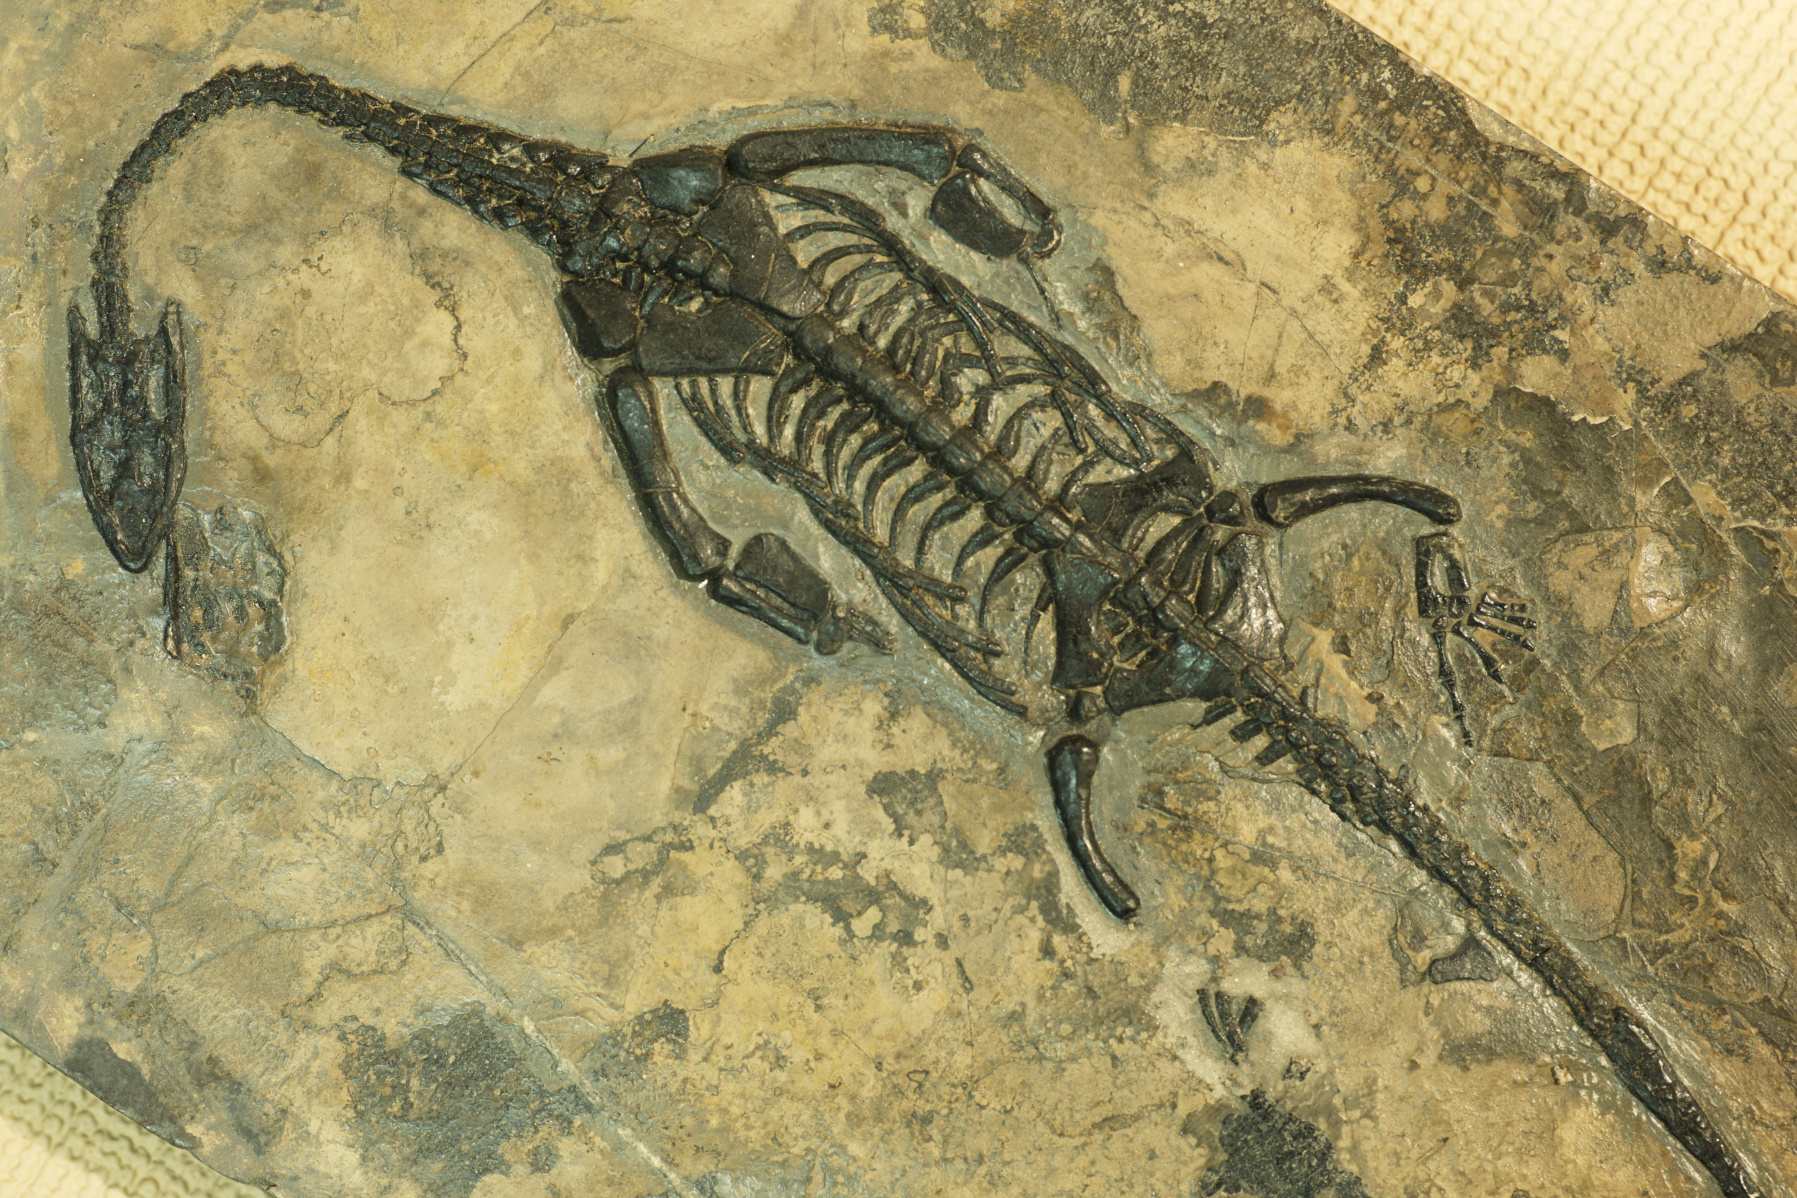 thalattosaur fossil